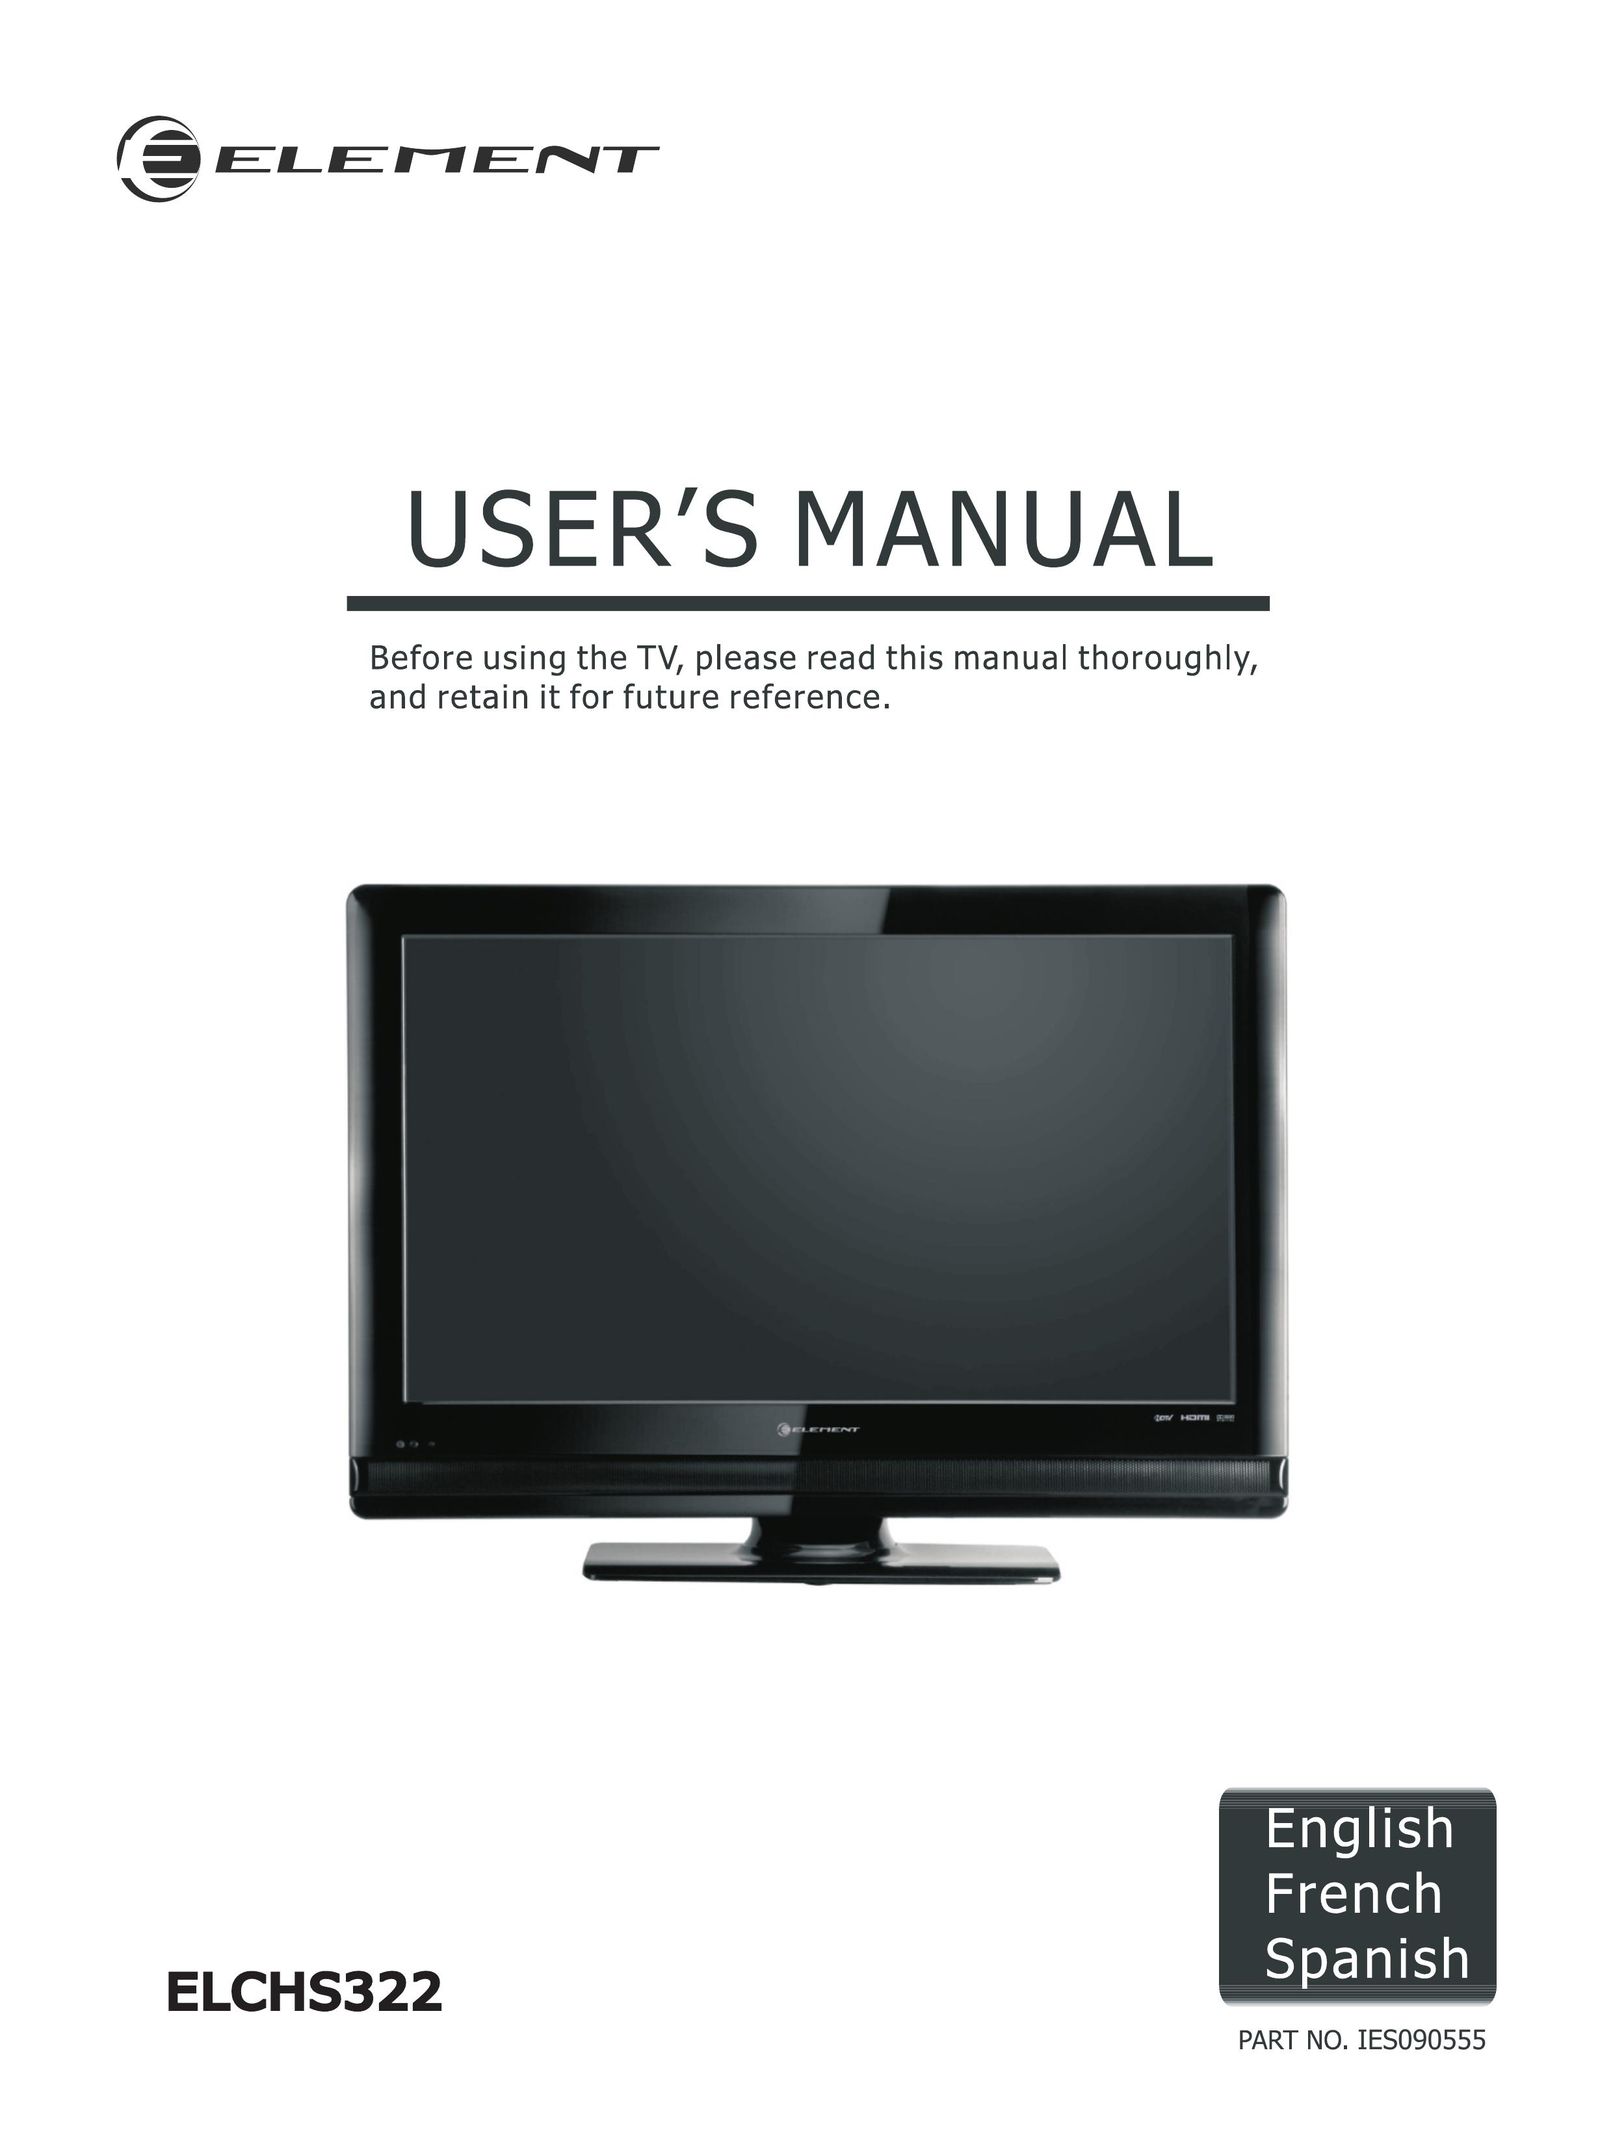 Element Electronics ELCHS322 Flat Panel Television User Manual